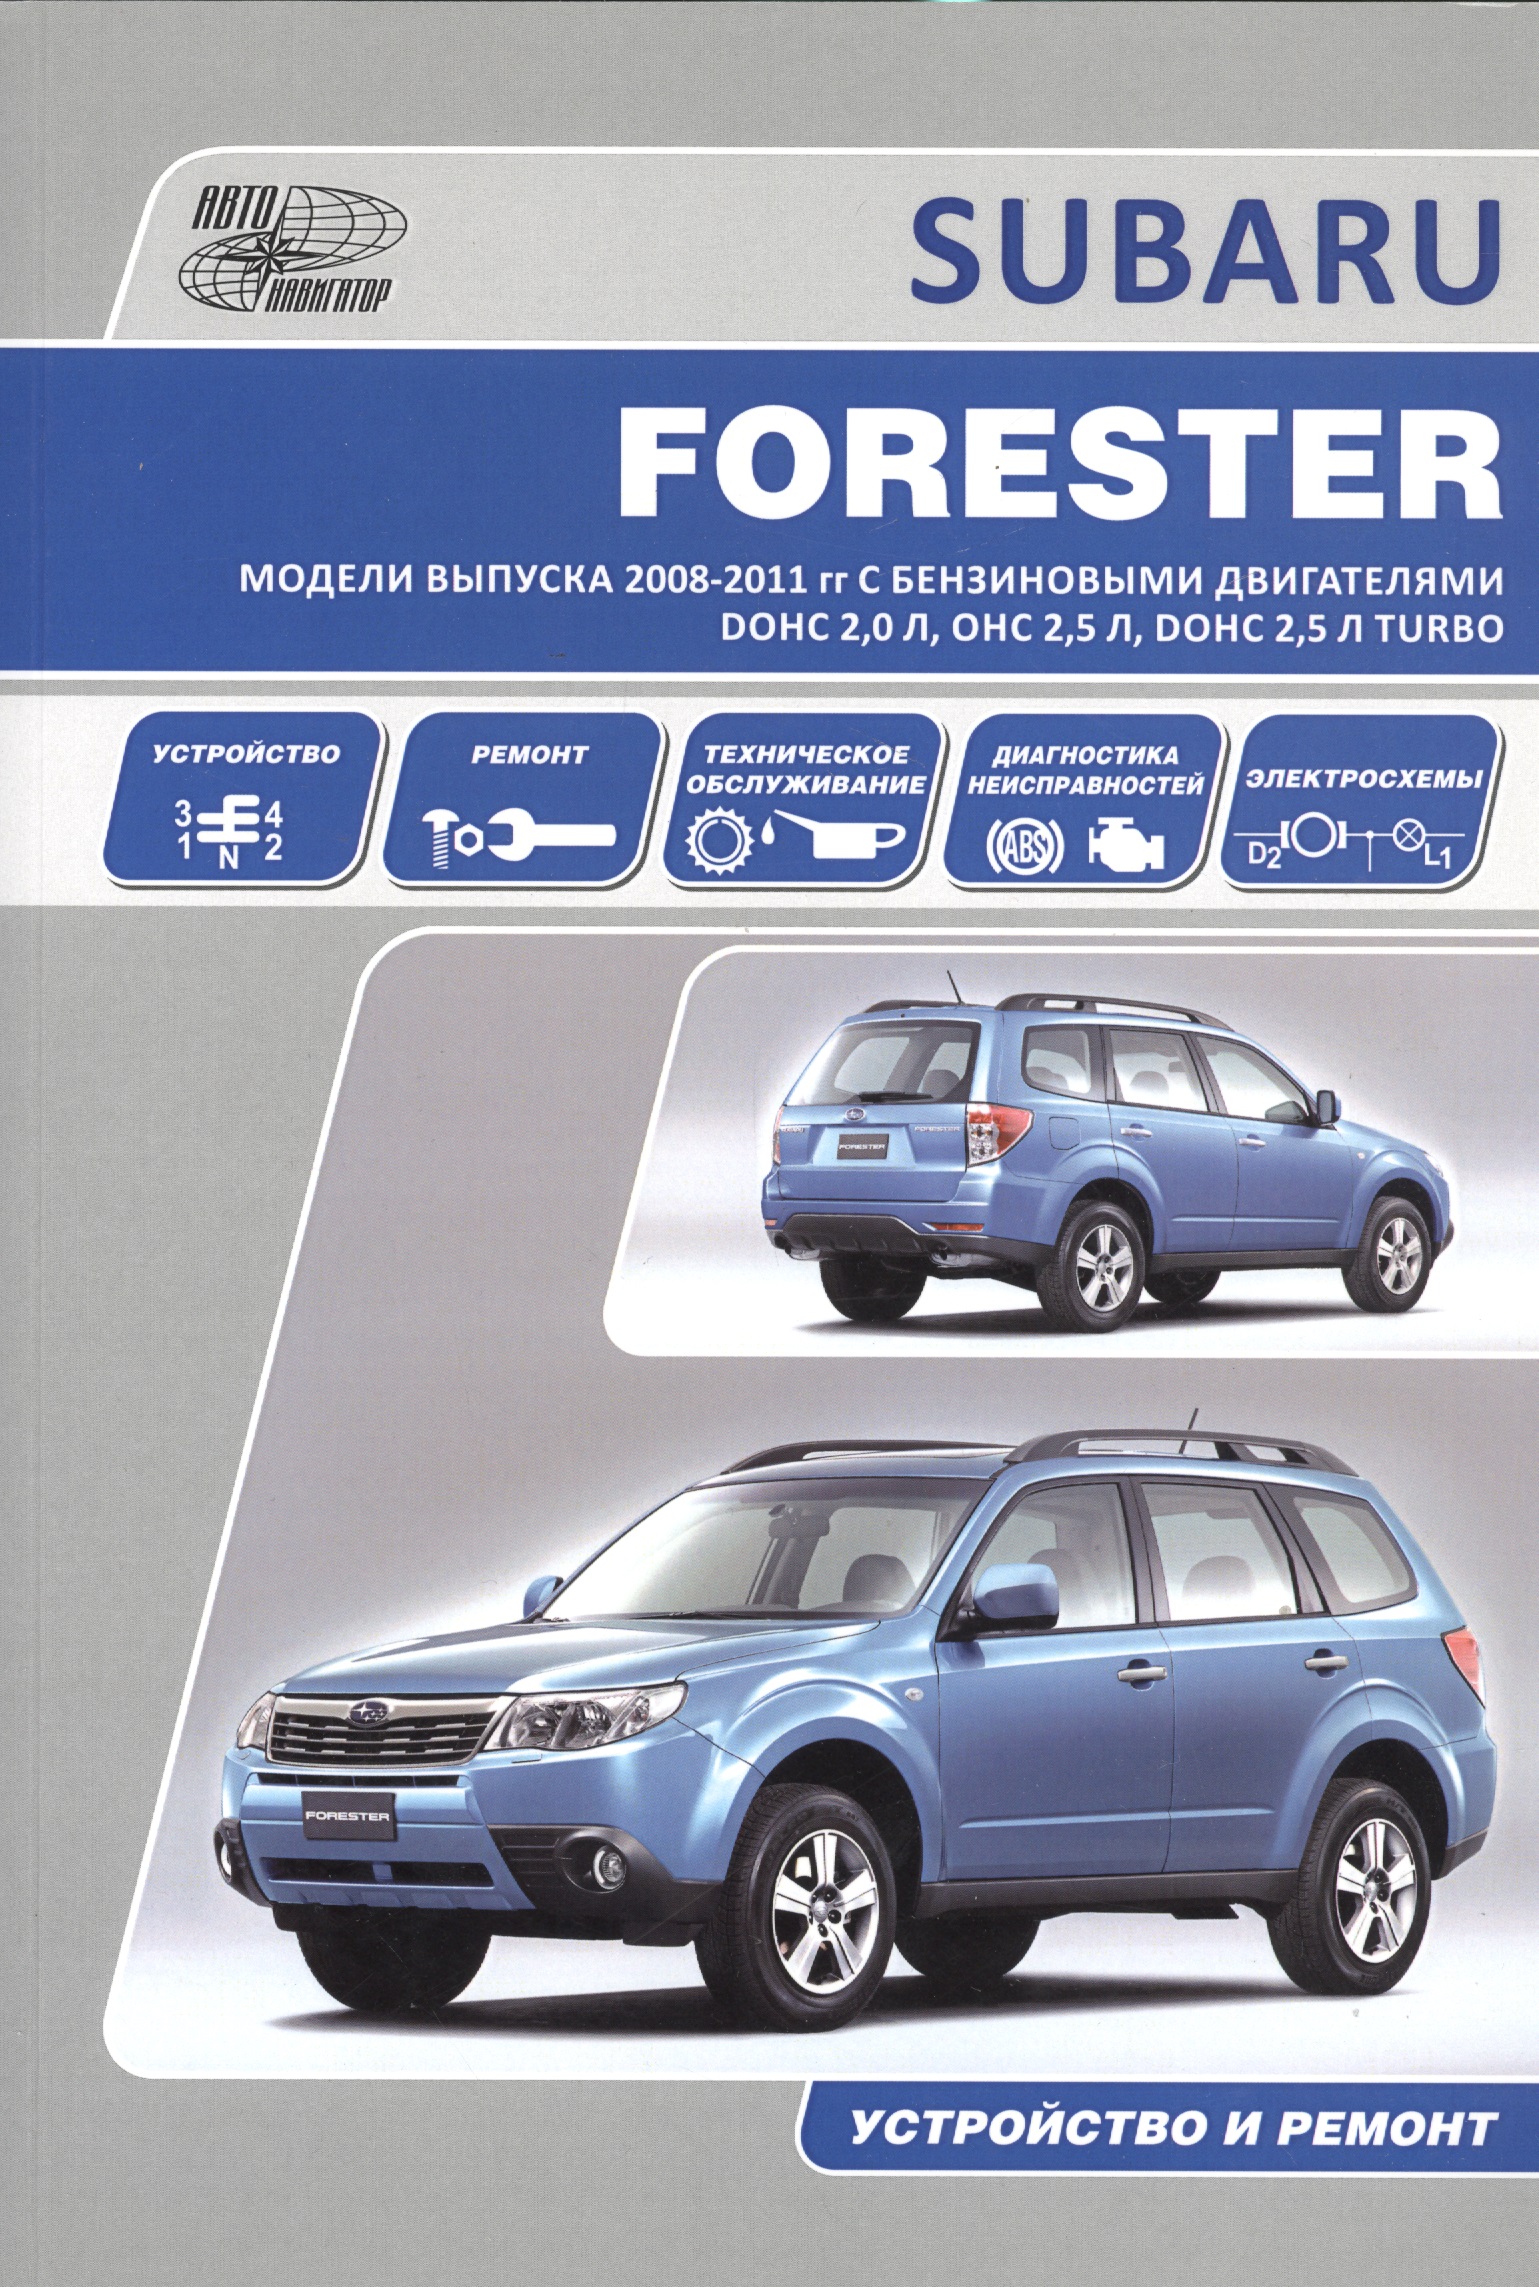 Subaru Forester Мод. вып. 2008-2011 гг. с бенз. двигат. DOHC 2,0 л. (м)